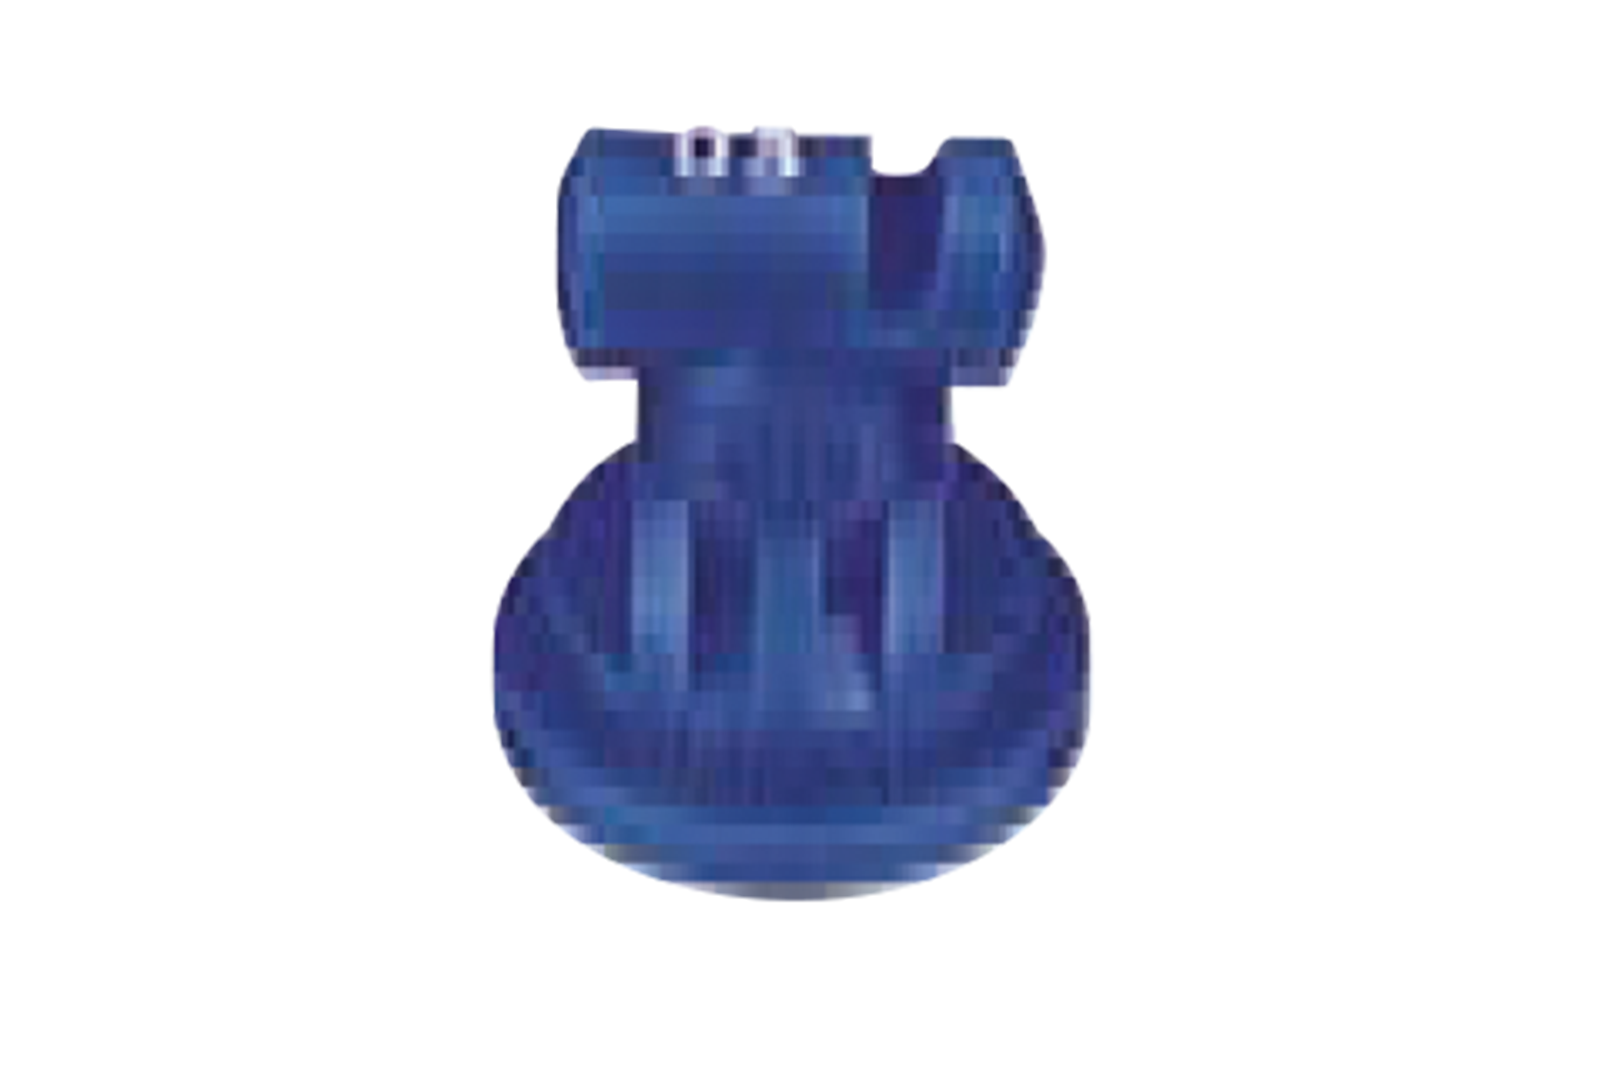 Turbo TeeJet Angle Flat Spray Tips Pack 10 Blue